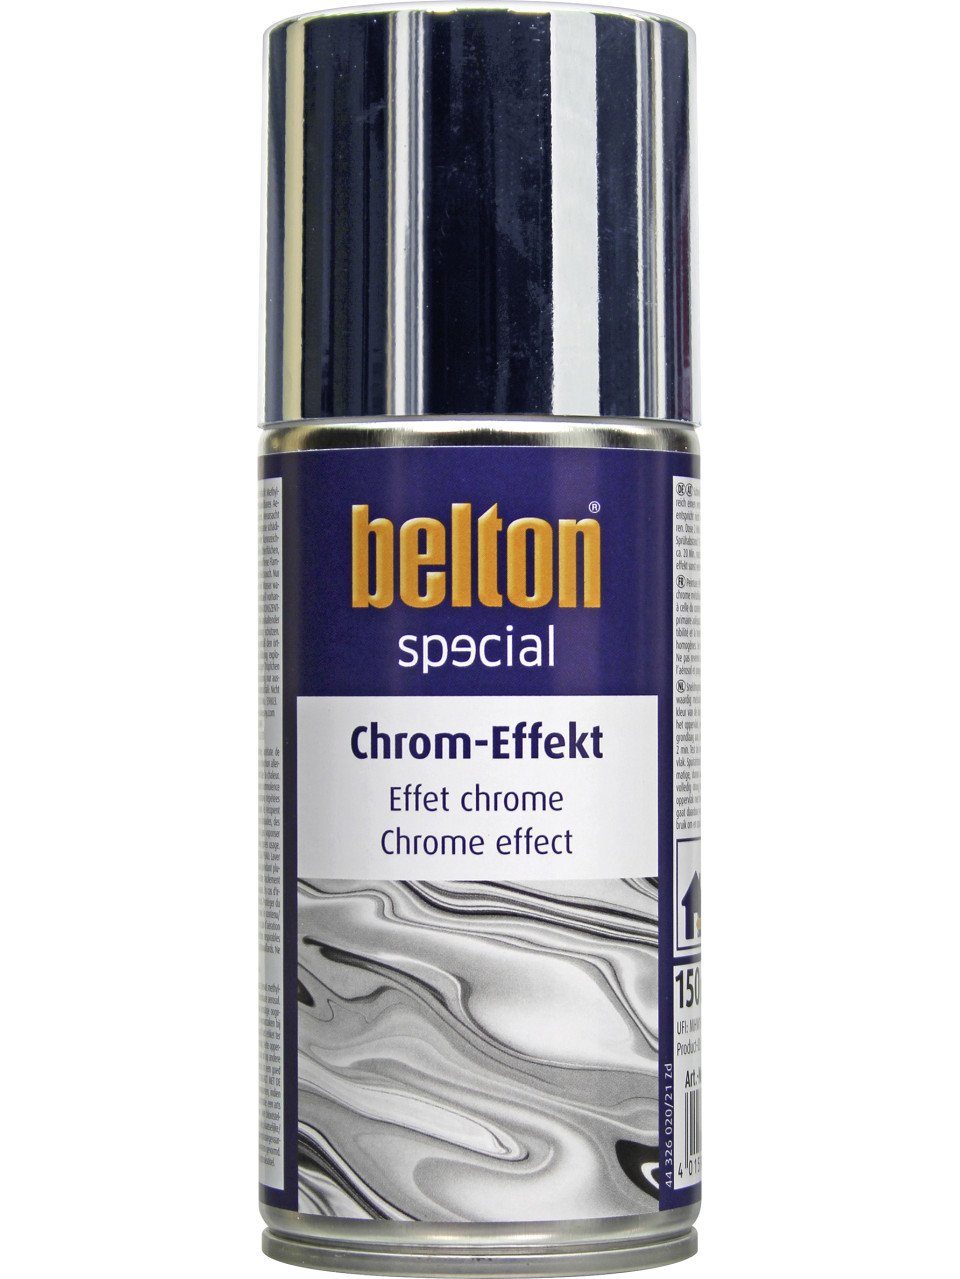 belton Sprühlack Belton special Chrom-Effekt-Spray 150 ml chrom